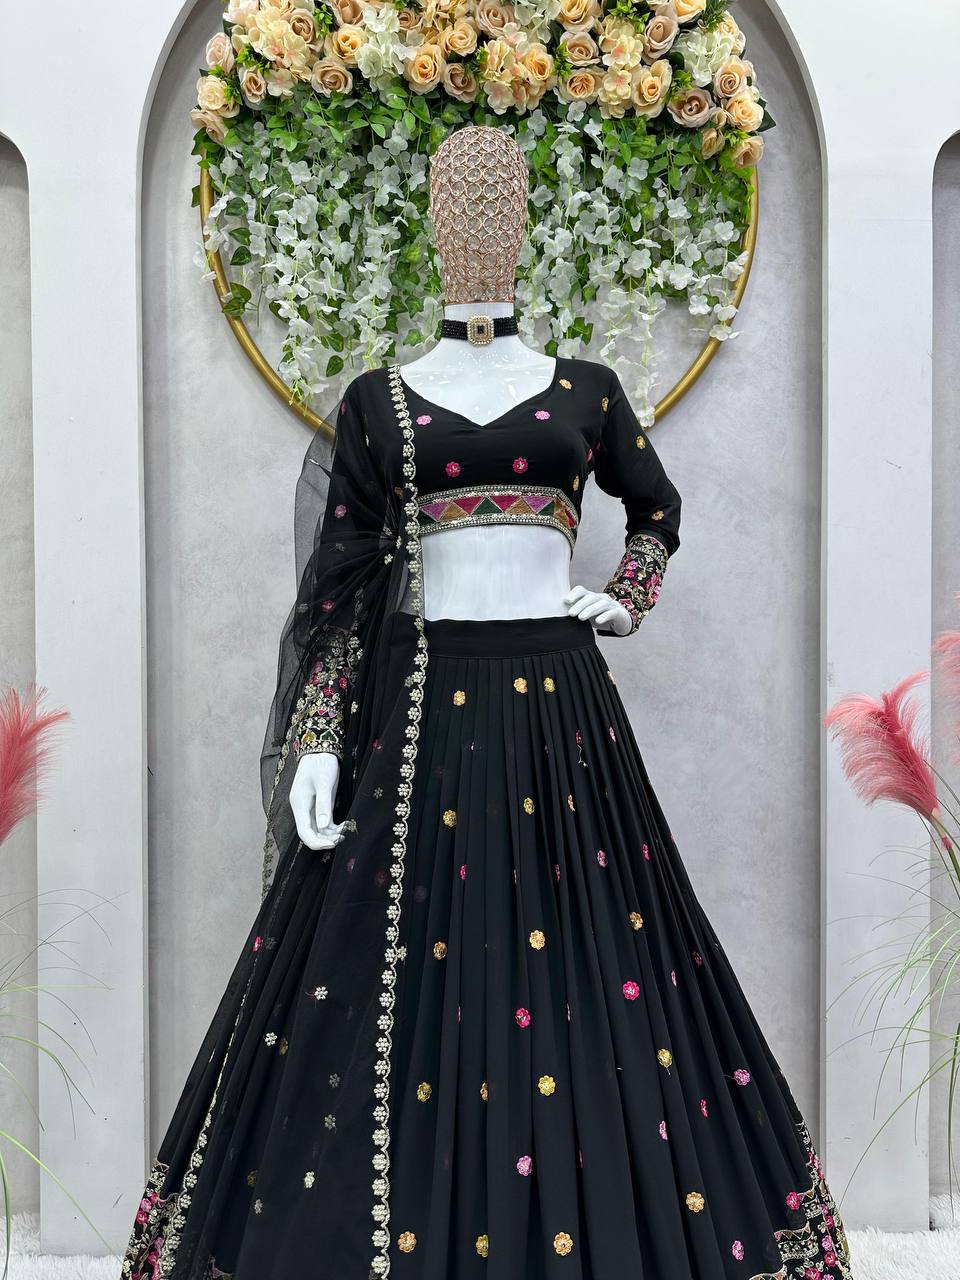 Attractive Black Lehenga Choli on Wedding Wear Latest Look for women